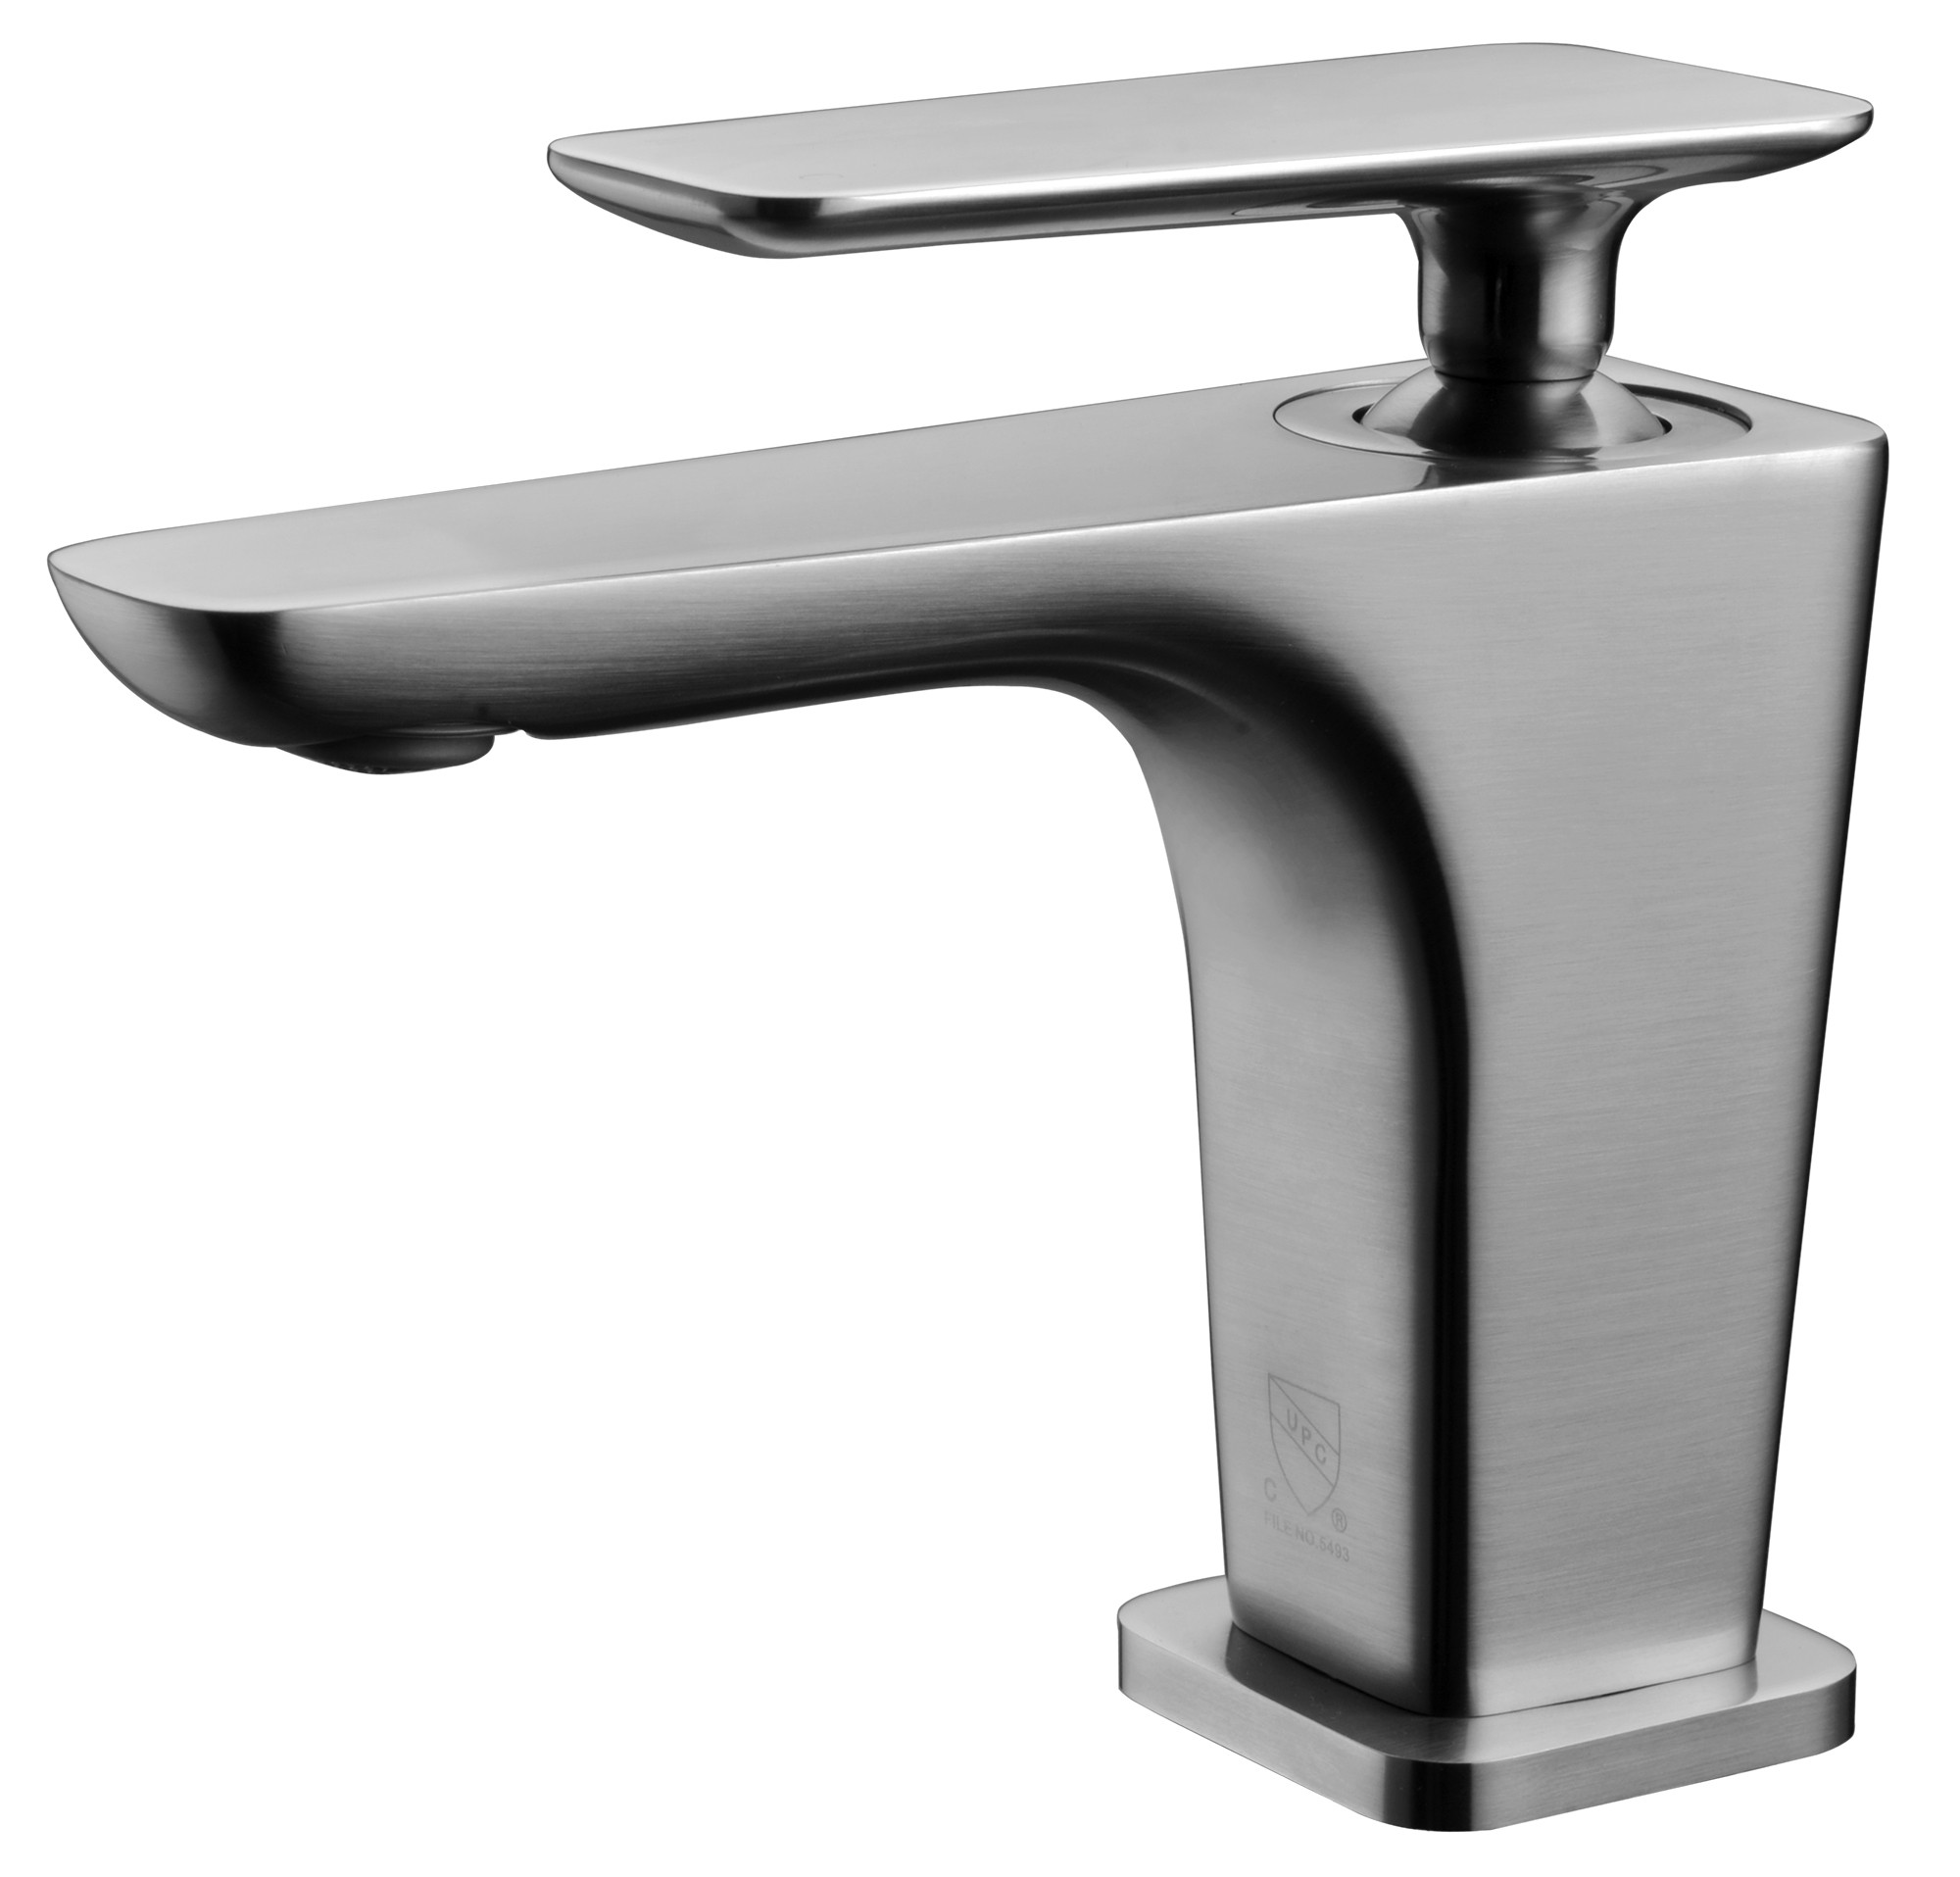 ALFI brand AB1779-BN Brushed Nickel Single Hole Modern Bathroom Faucet